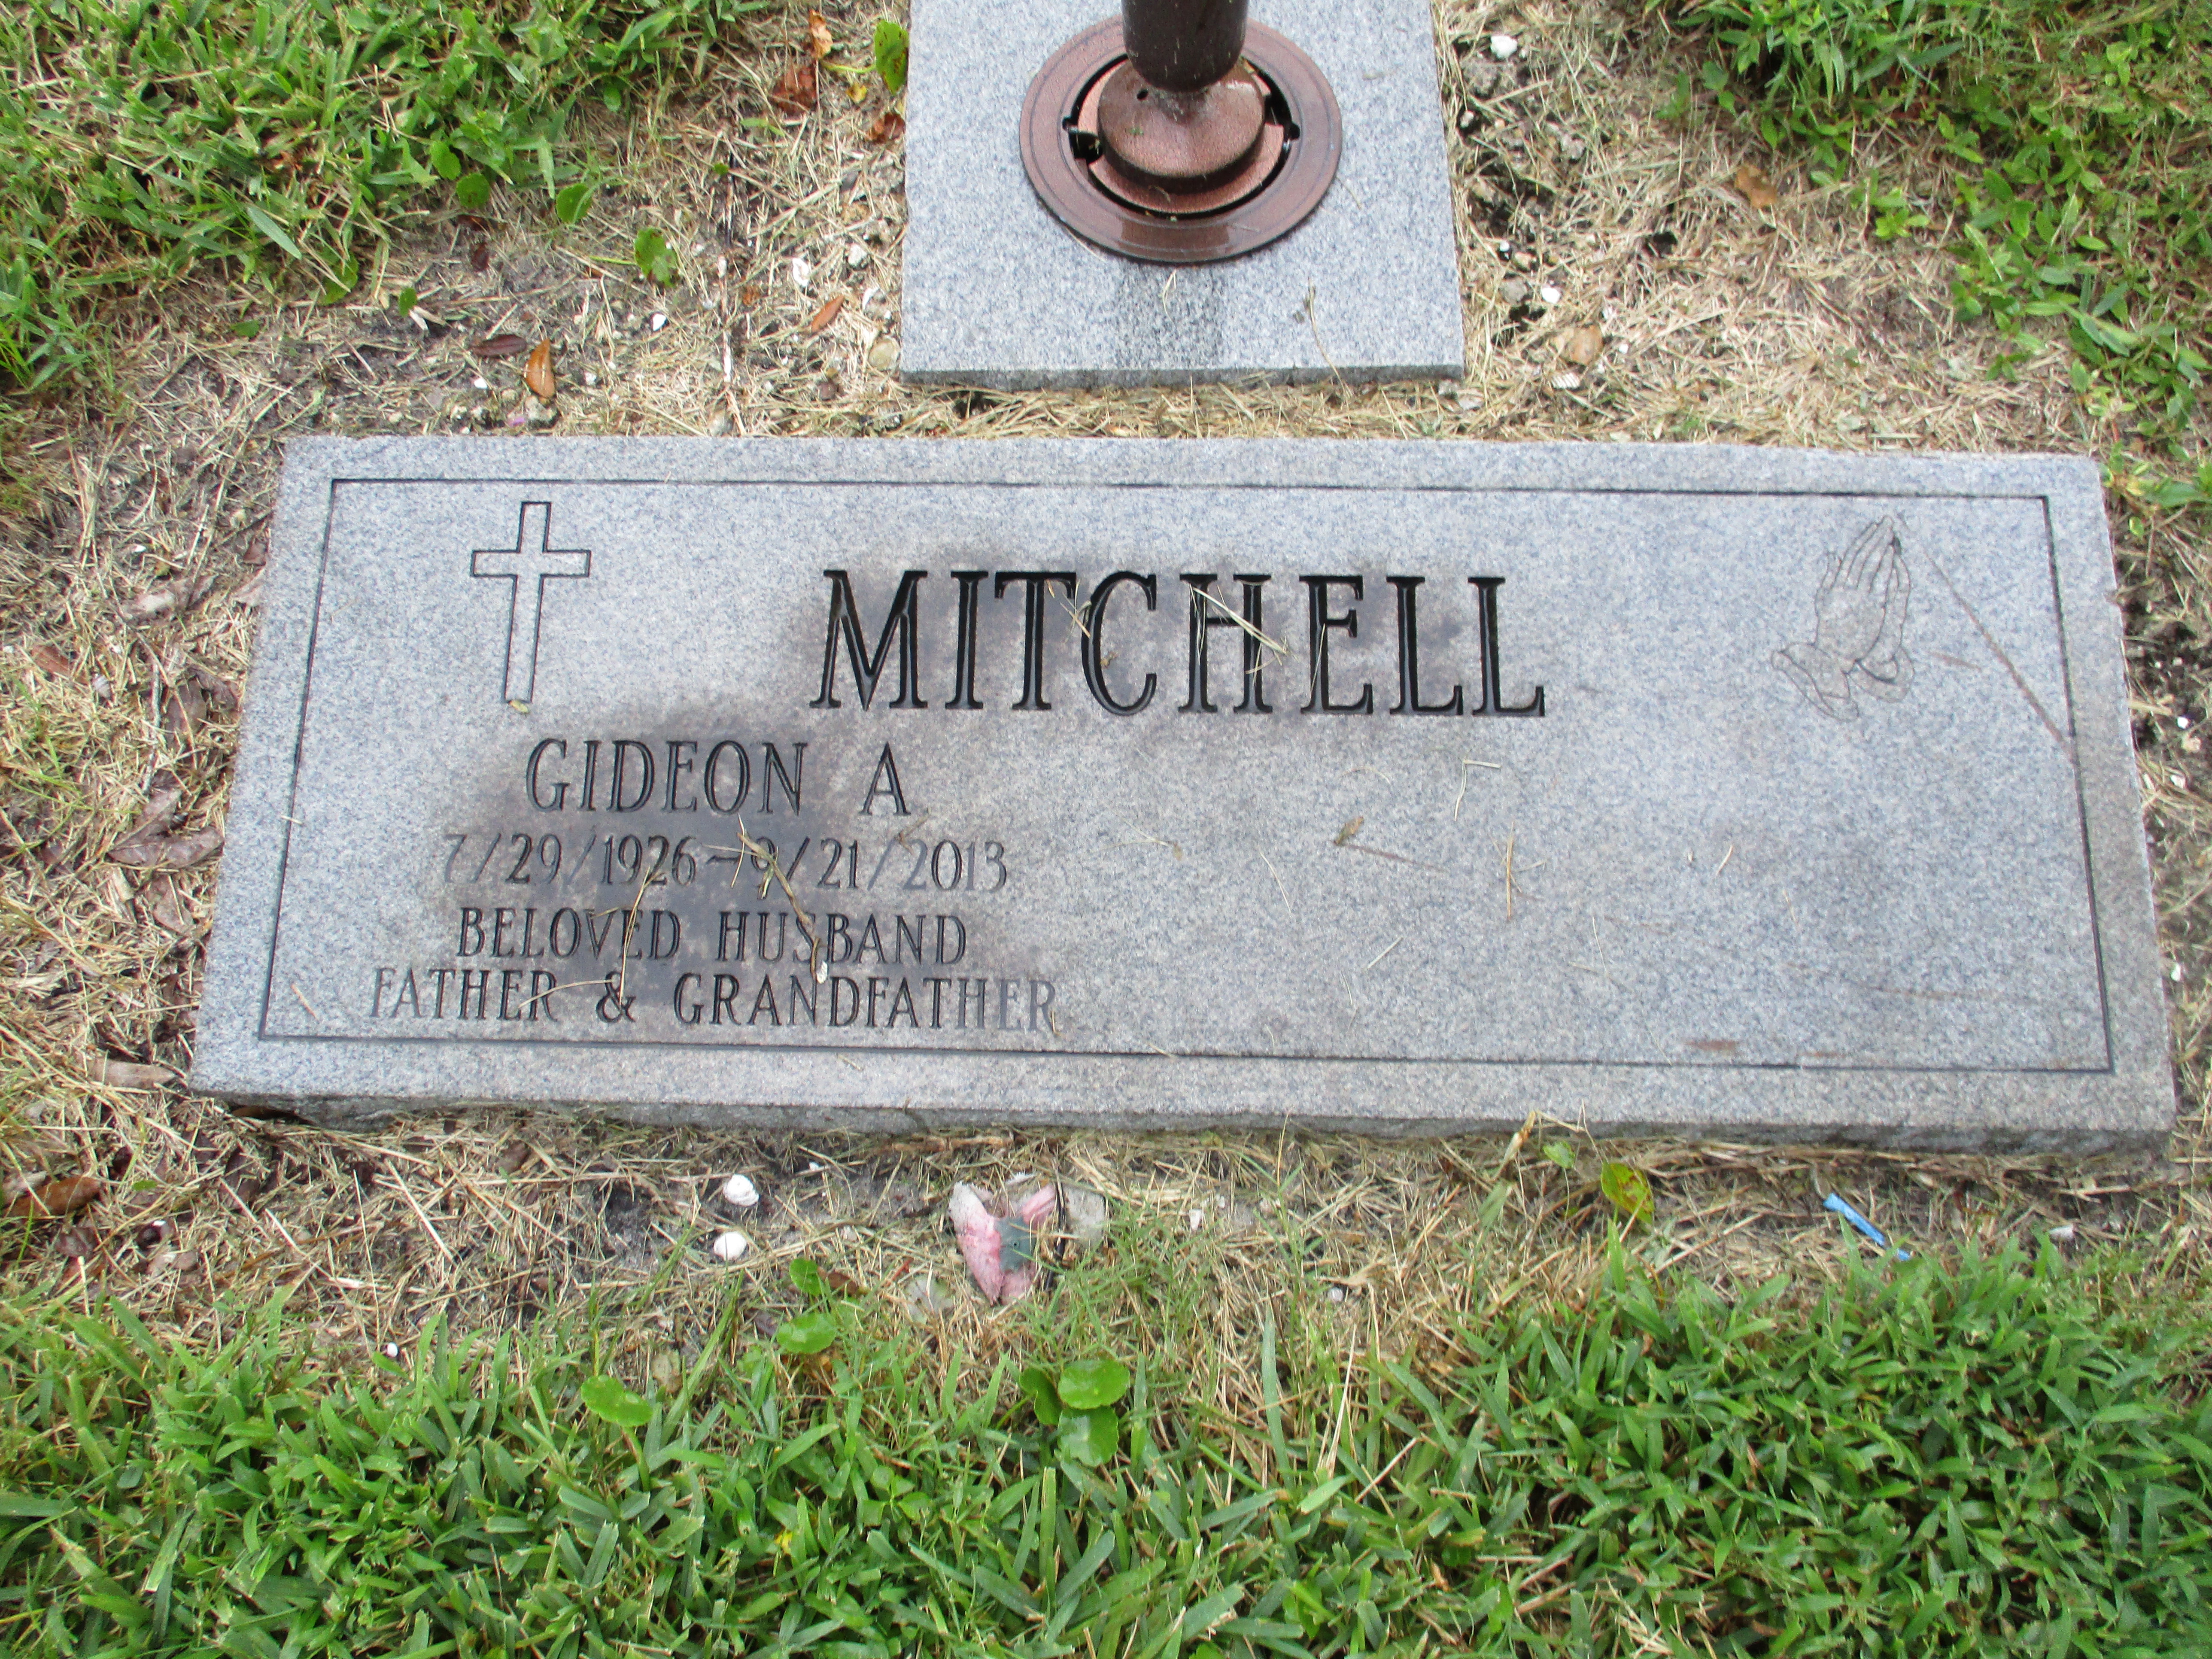 Gideon A Mitchell